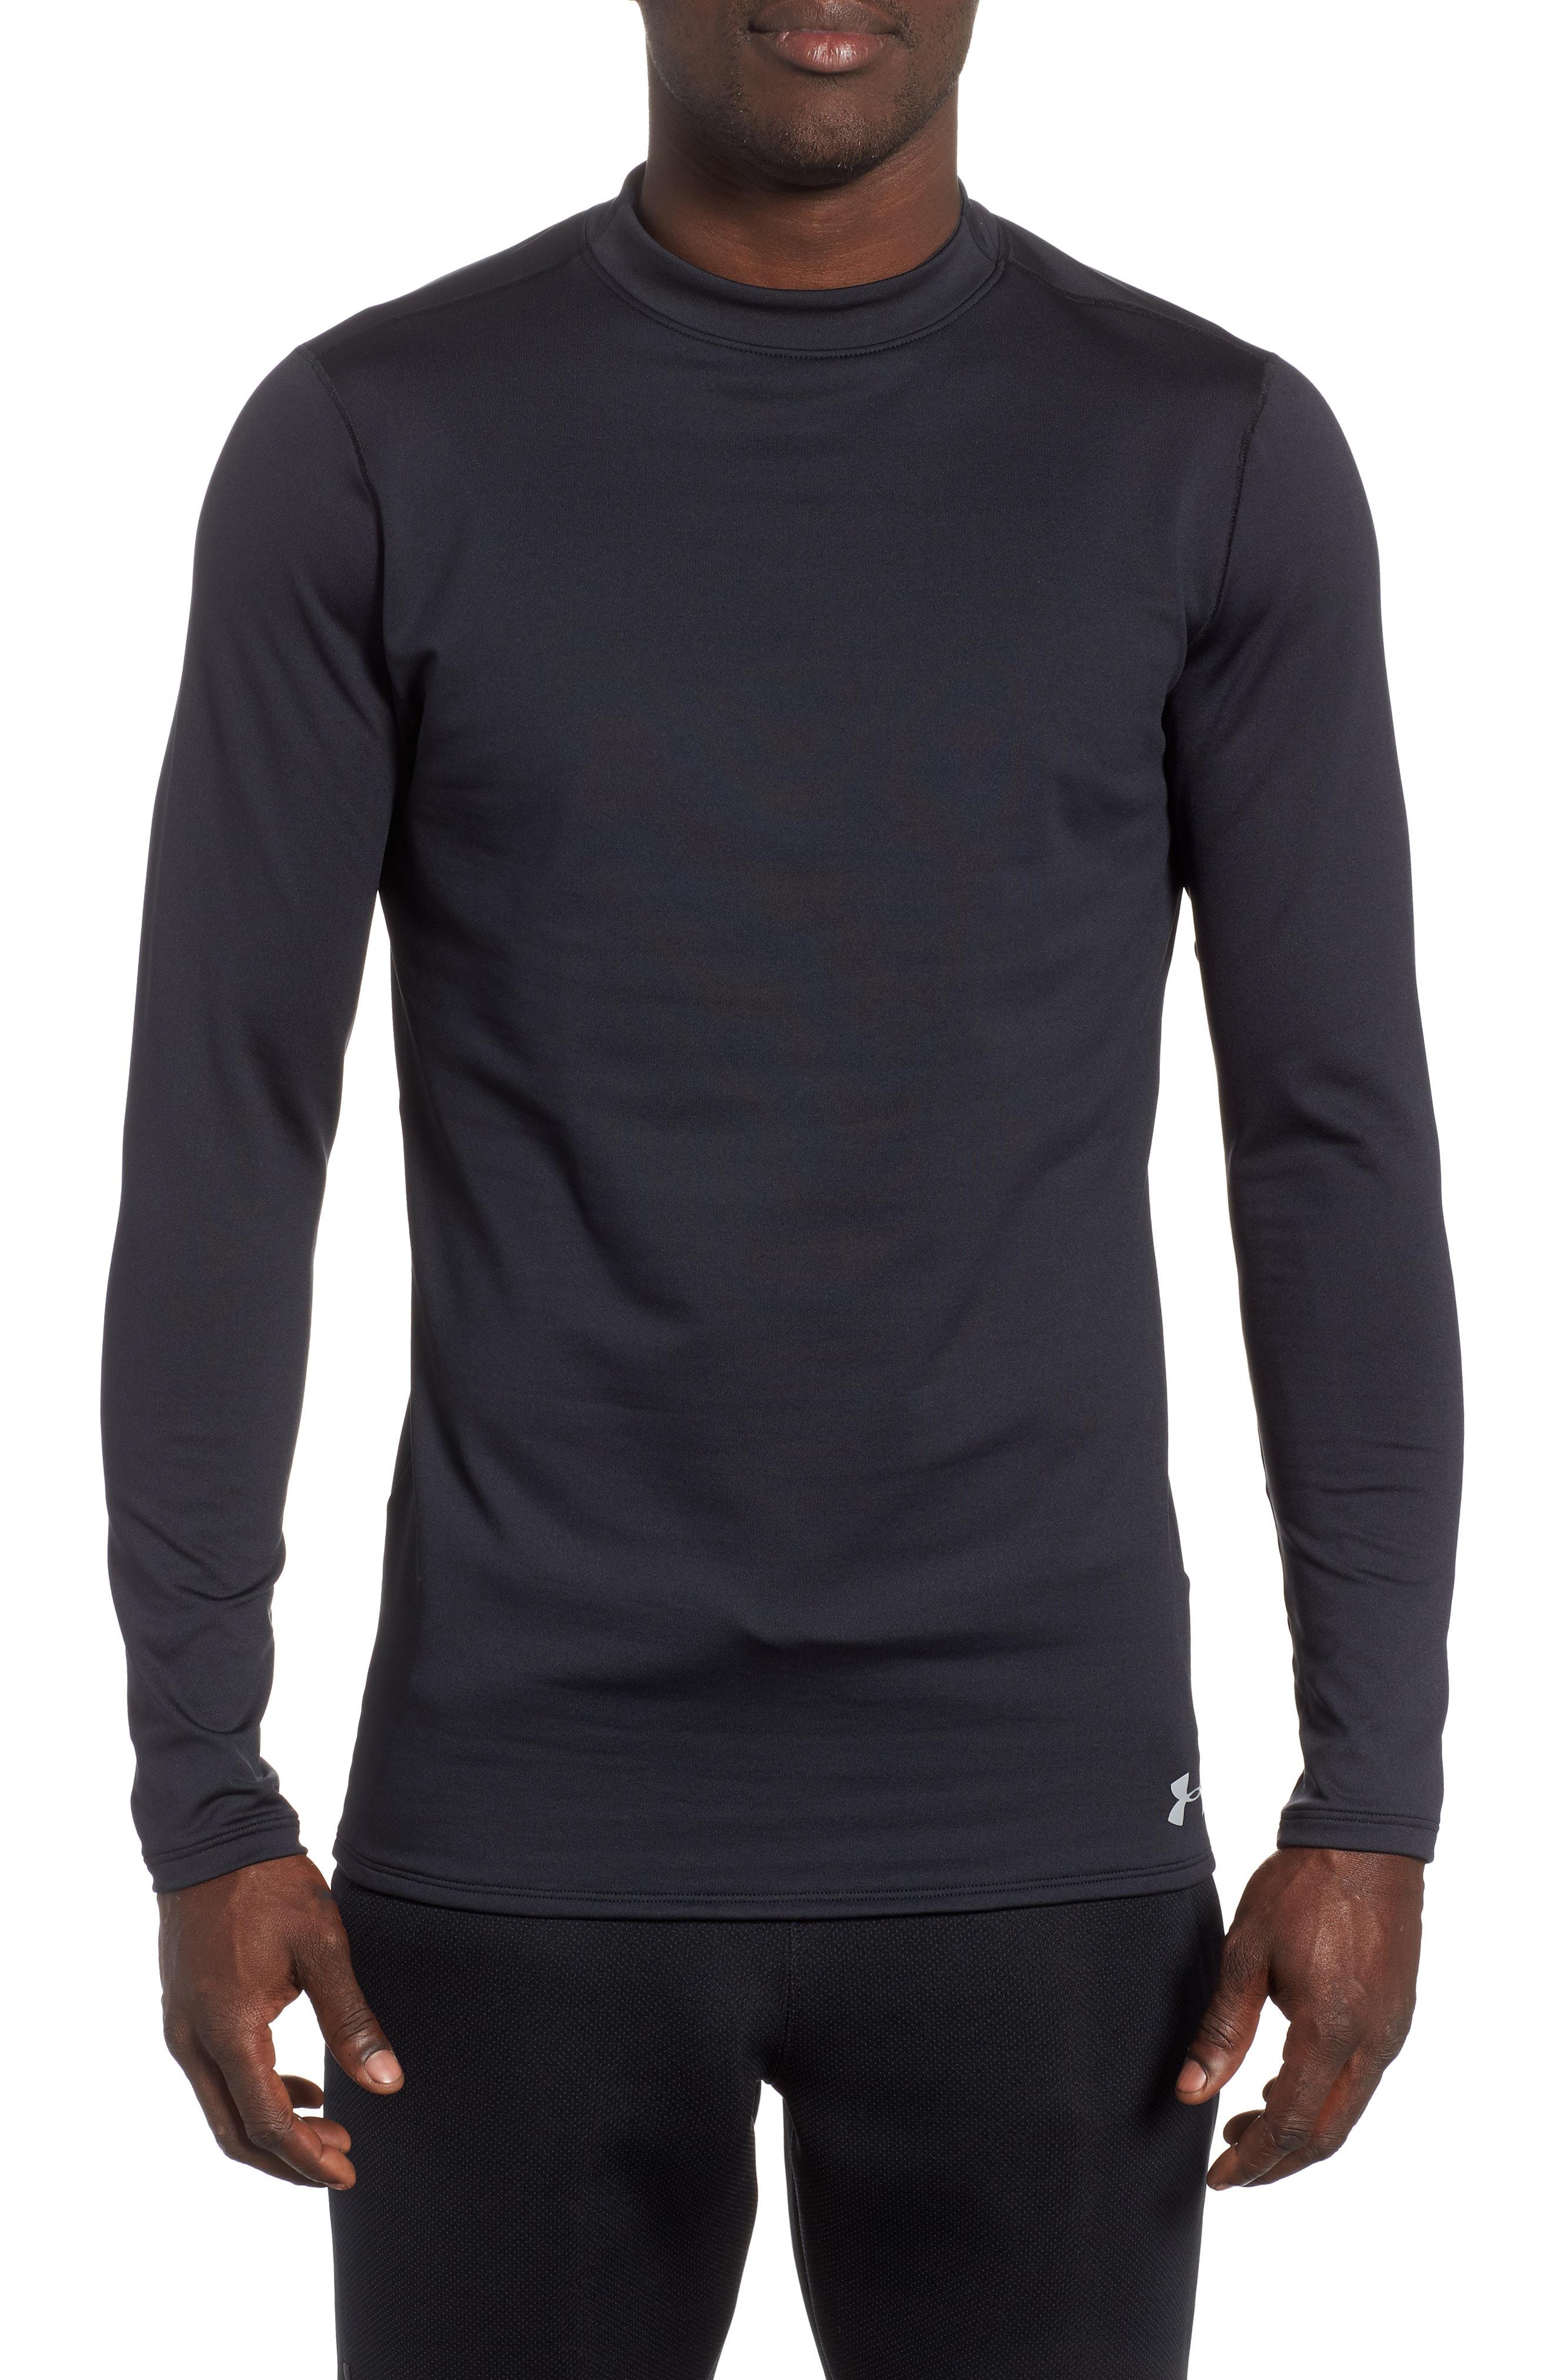 Lyst - Under Armour Coldgear Mock Neck Long Sleeve T-shirt in Black for Men